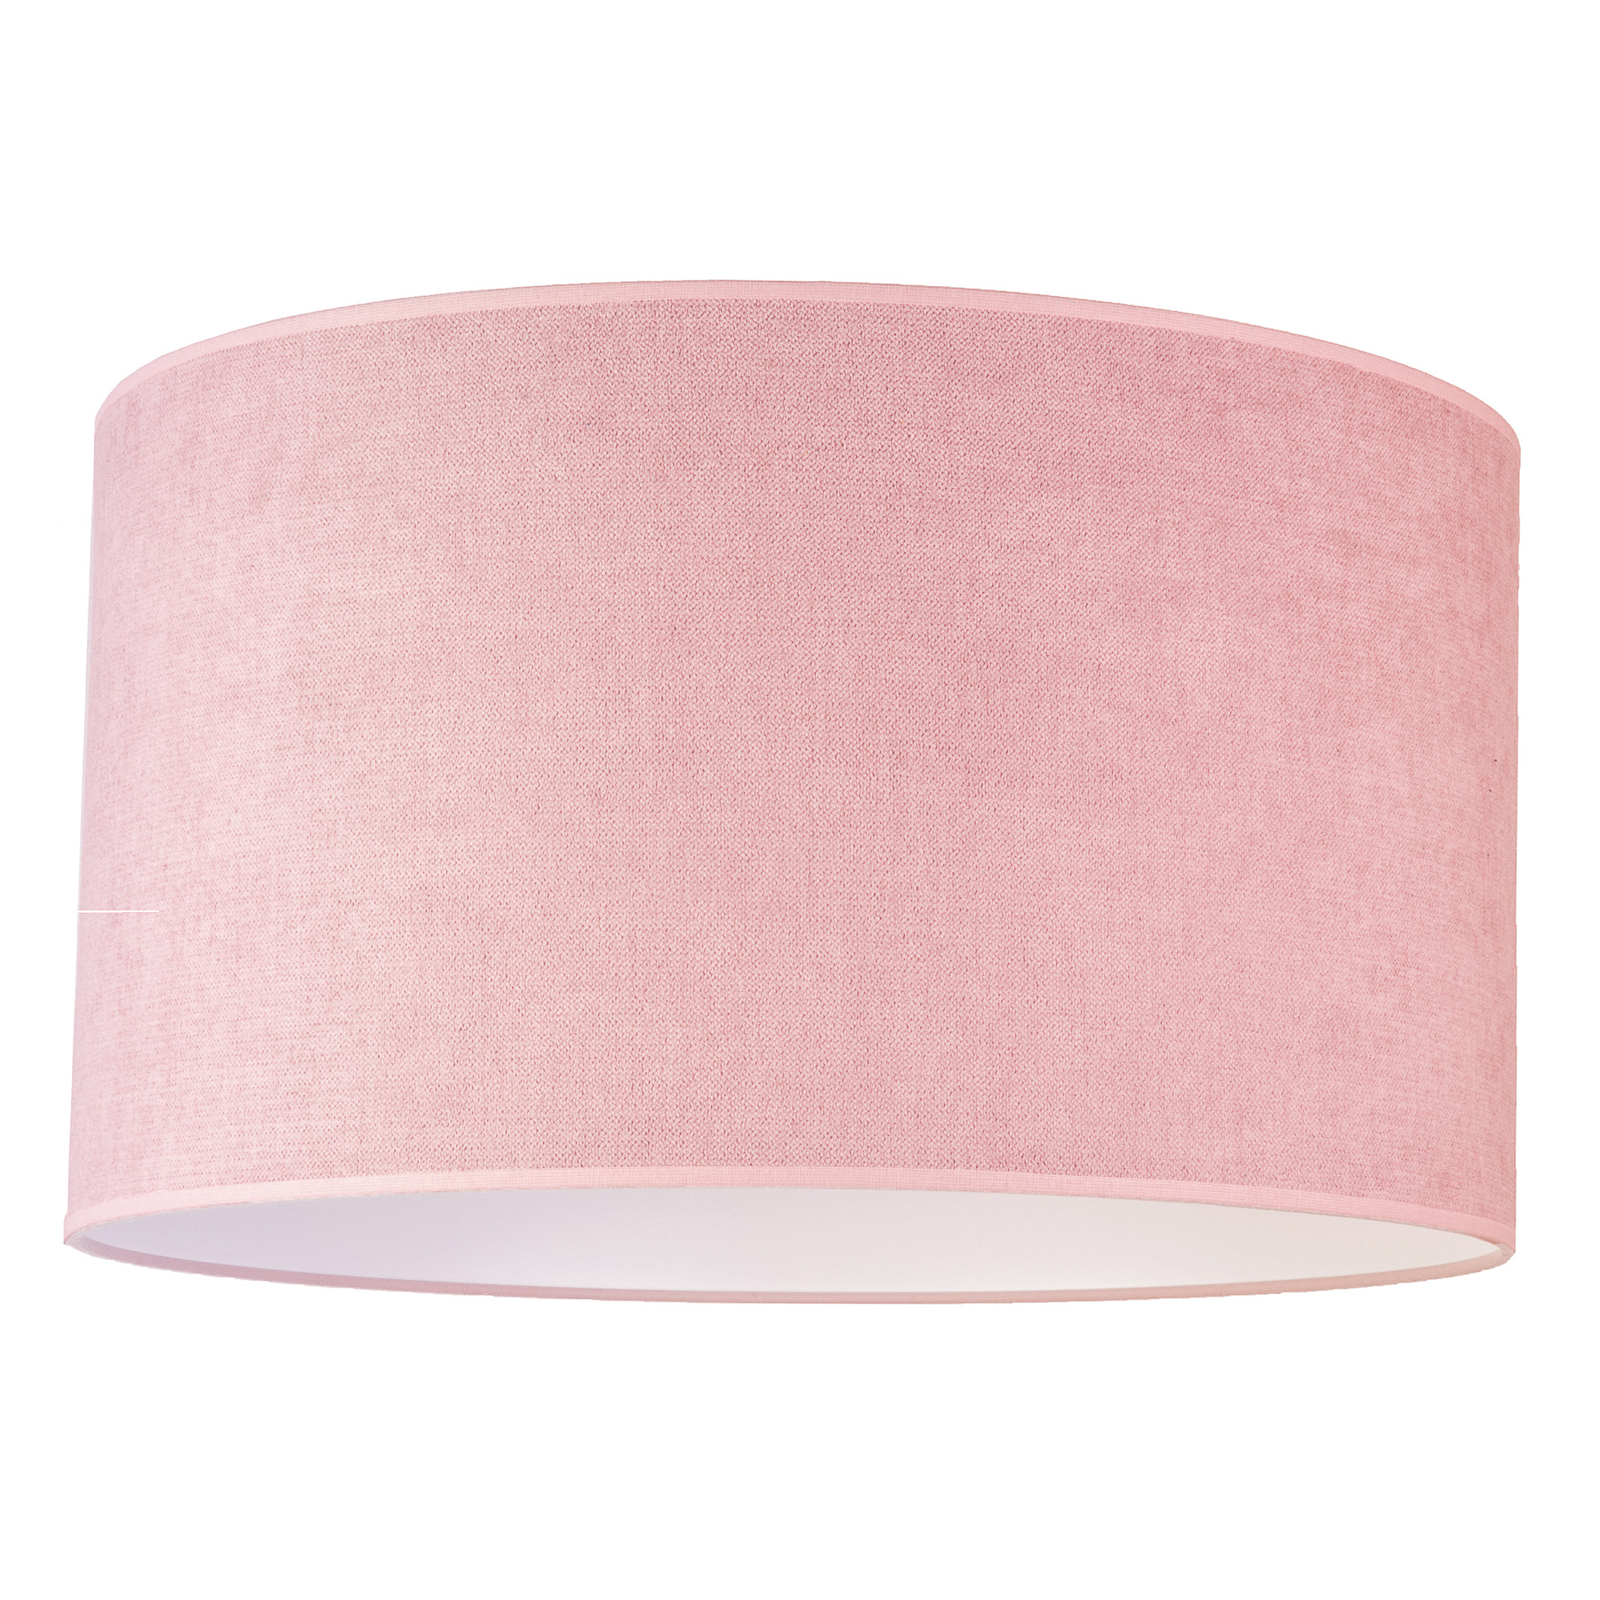 Percentage stam Oprechtheid Plafondlamp Pastell Roller Ø 60cm roze | Lampen24.be